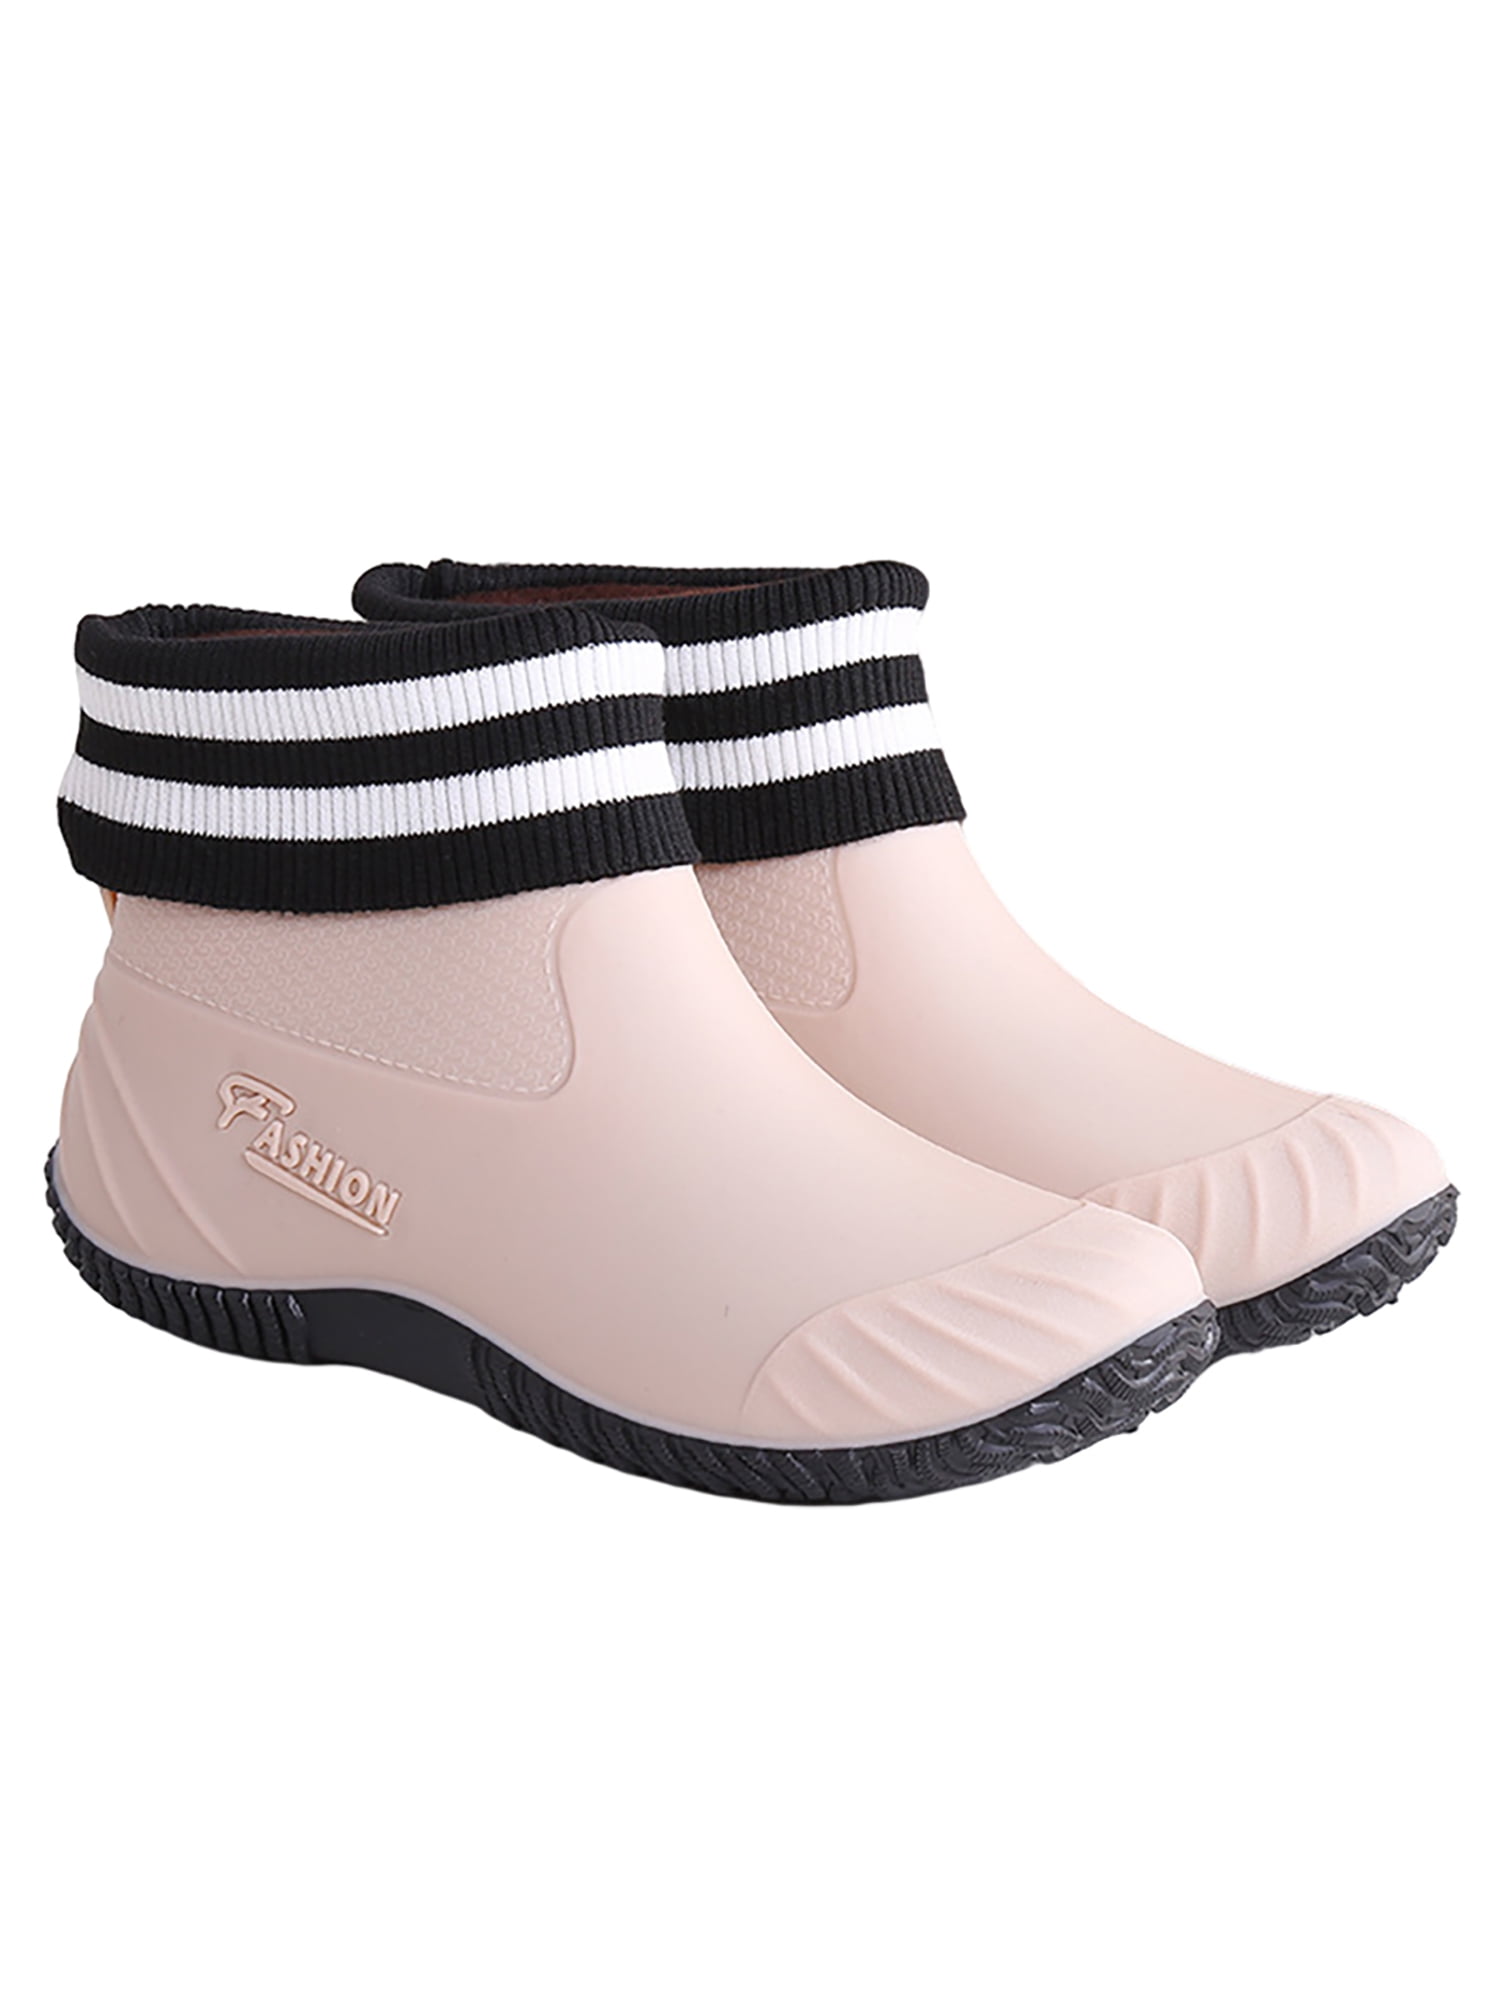 SIMANLAN Women's Ankle Rain Boots Waterproof Garden Shoes Anti-Slip Rain  Shoes Rubber Sole Deck Boots Size 5-7.5 Black-2 7.5 